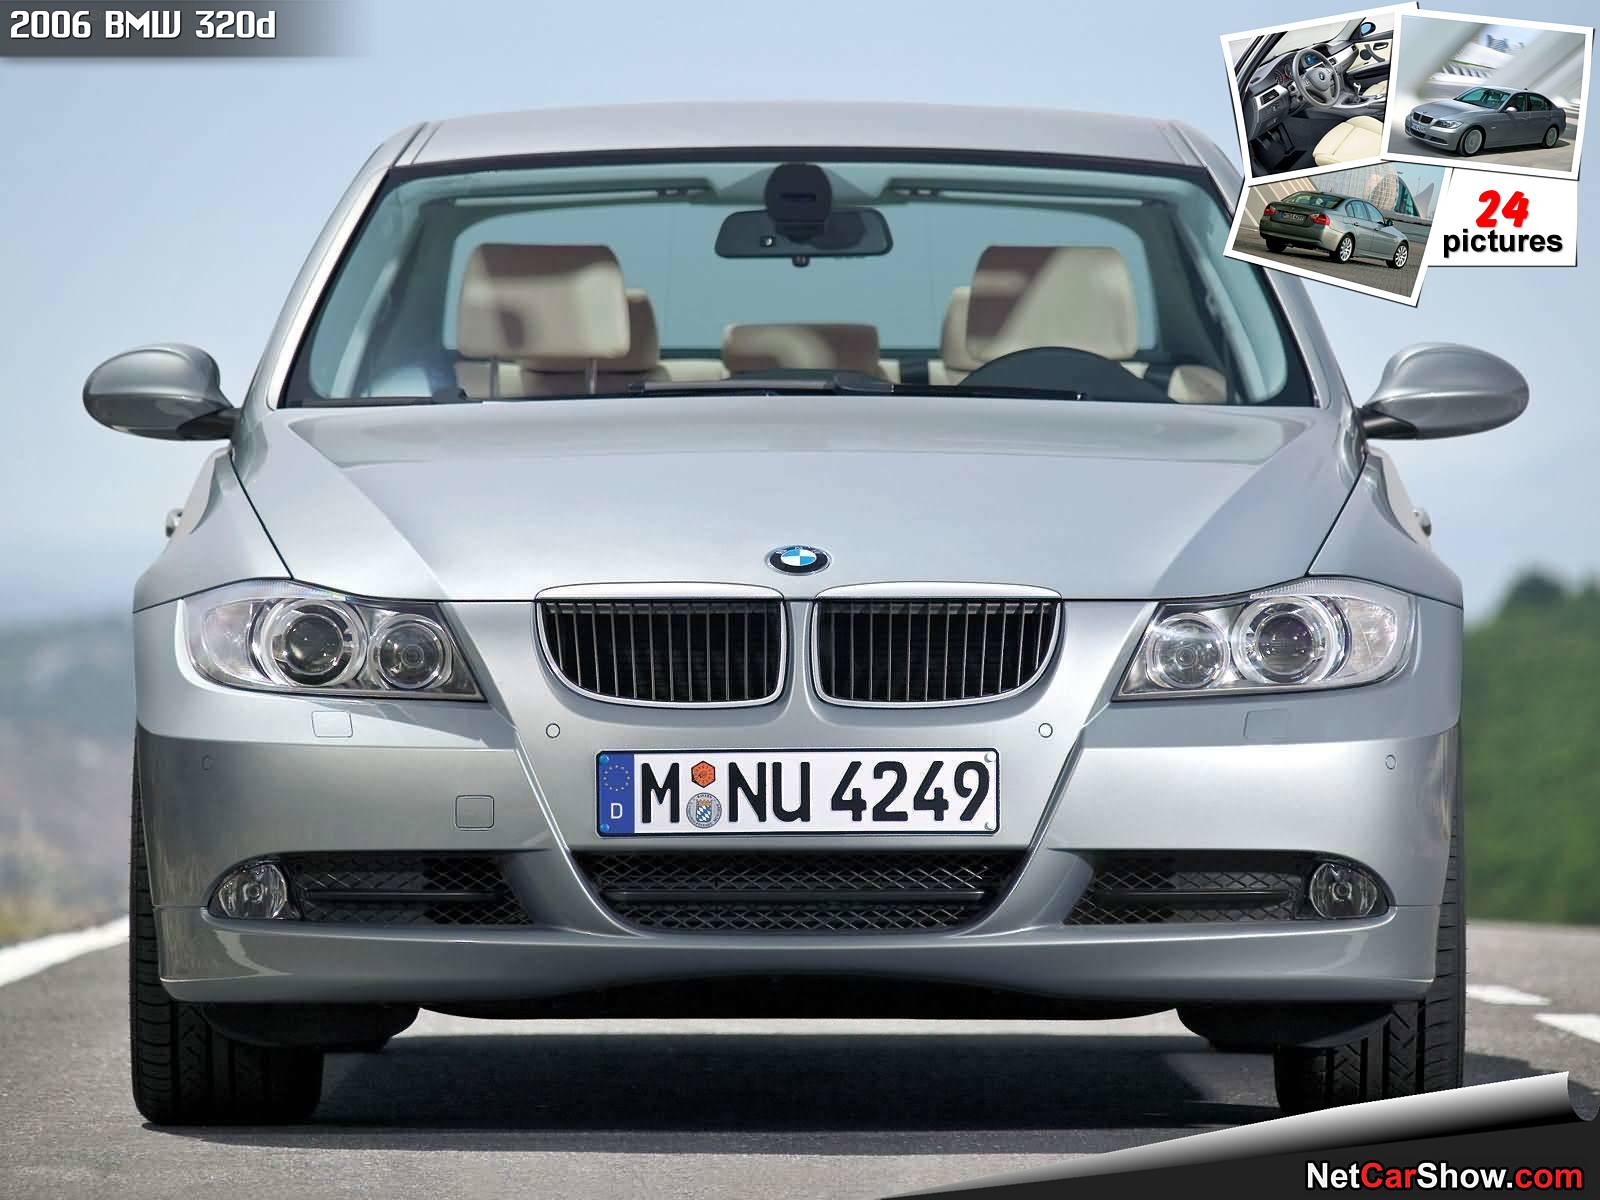 BMW 320d (2006), information & specs